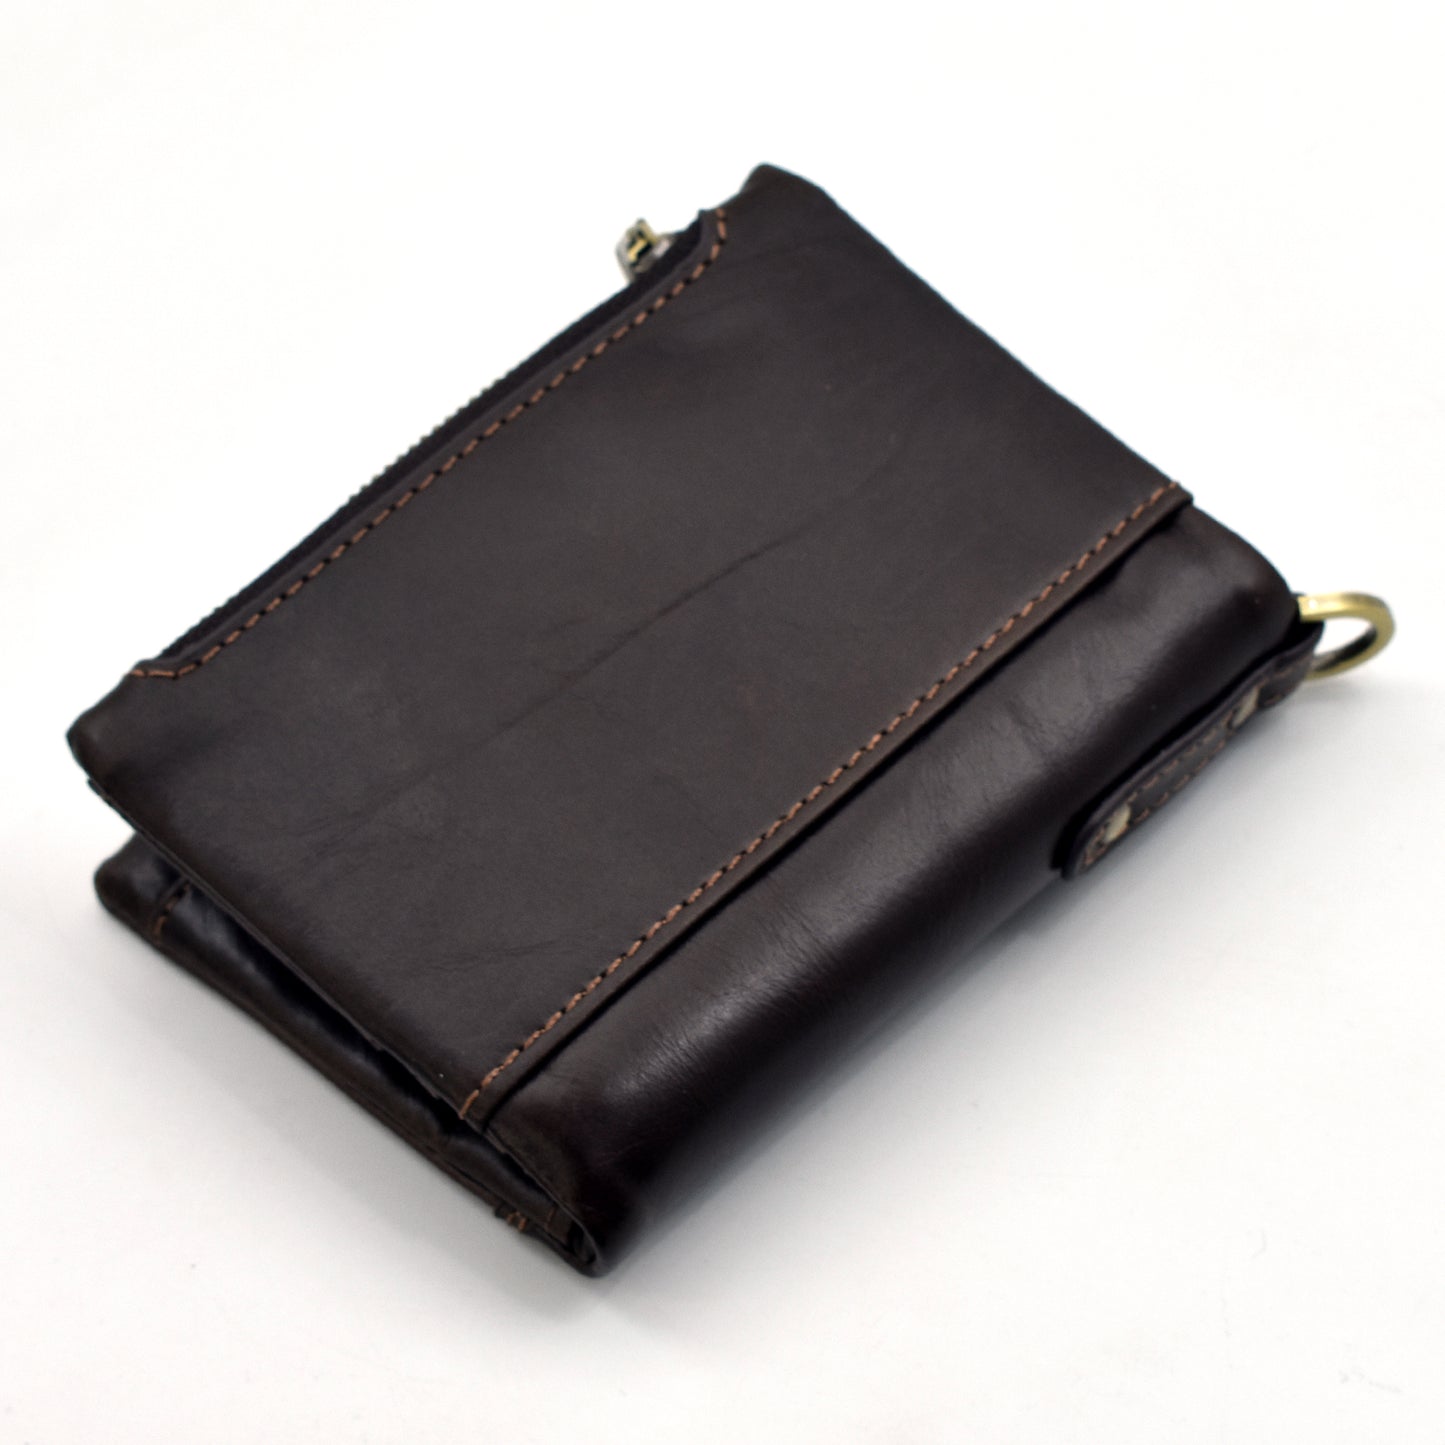 Original Kavis Wallet | Pocket Size Wallet | Kavis 18